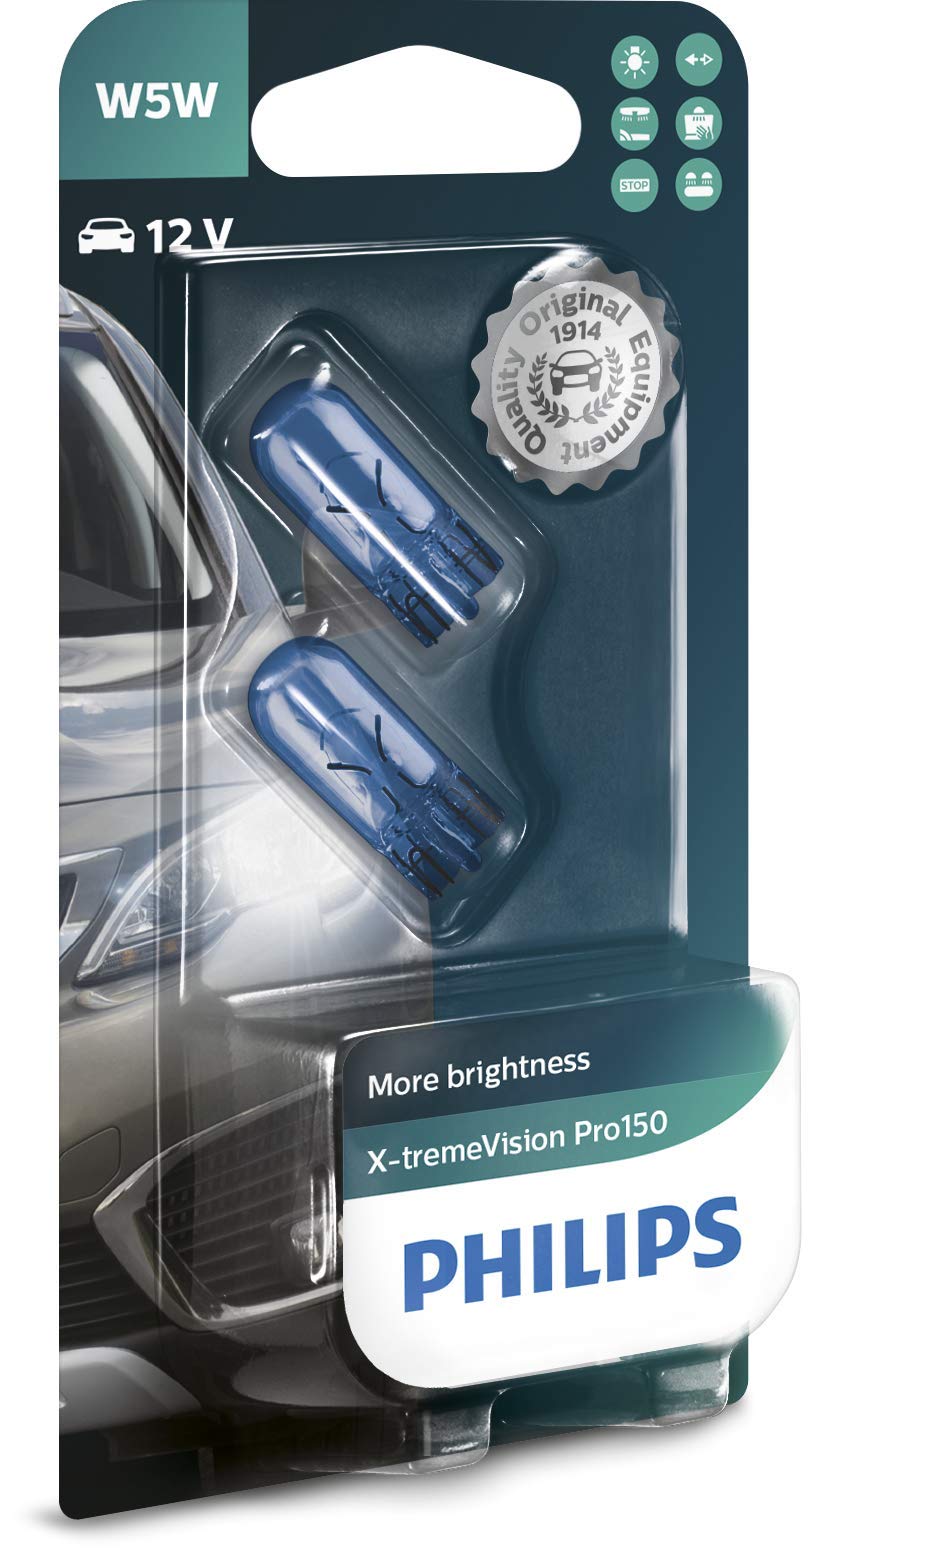 Philips Halogen automotive lighting X-tremeVision Pro150 W5W Signallampe, Doppelblister, 563230, Double blister von Philips automotive lighting